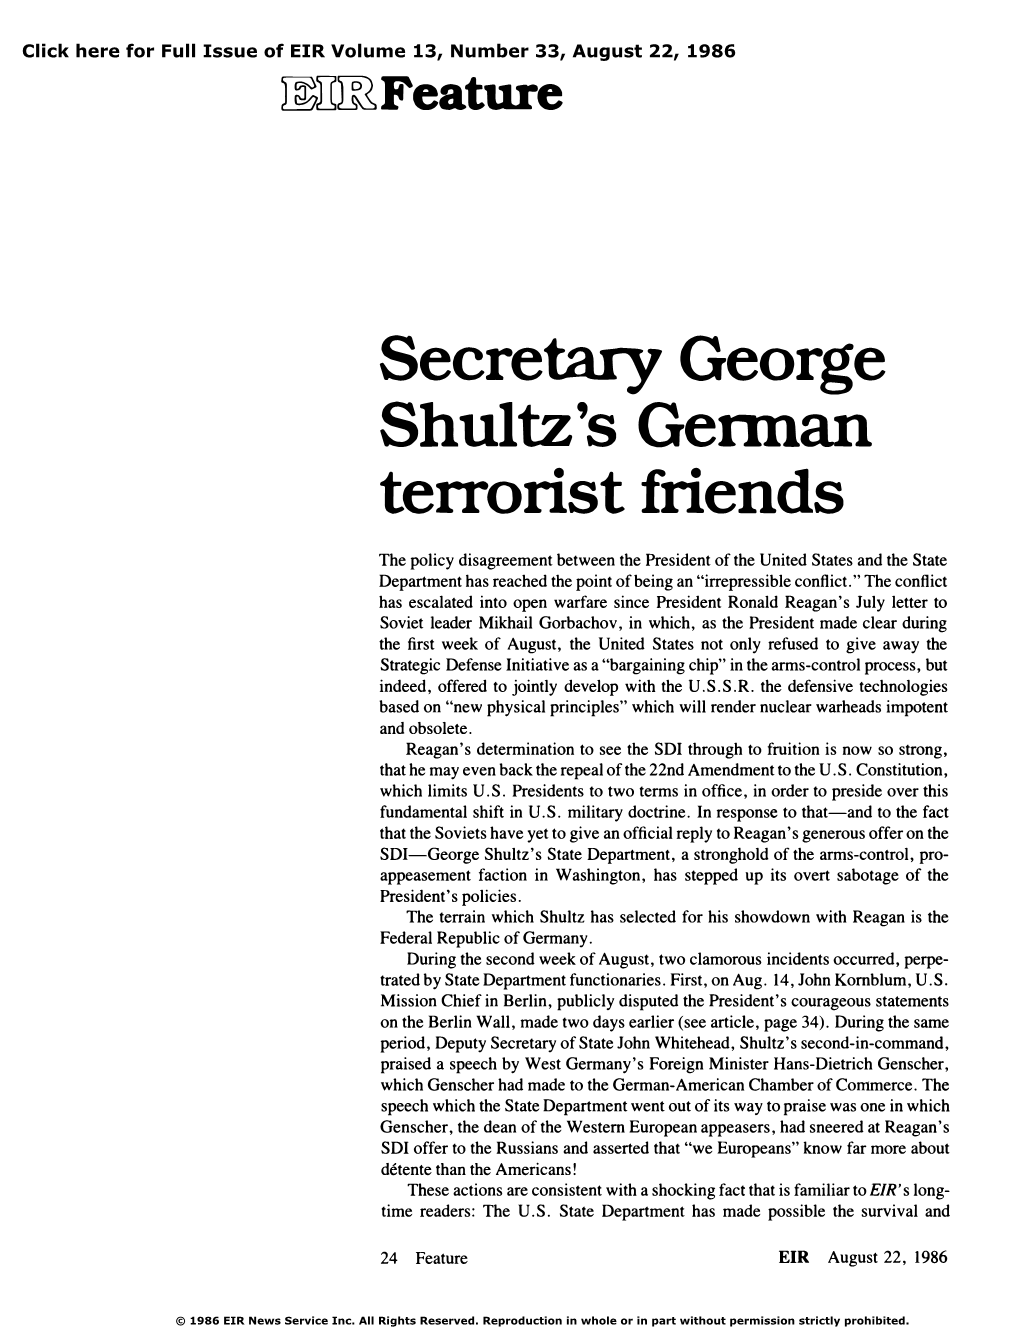 Secretary George Shultz's German Terrorist Friends